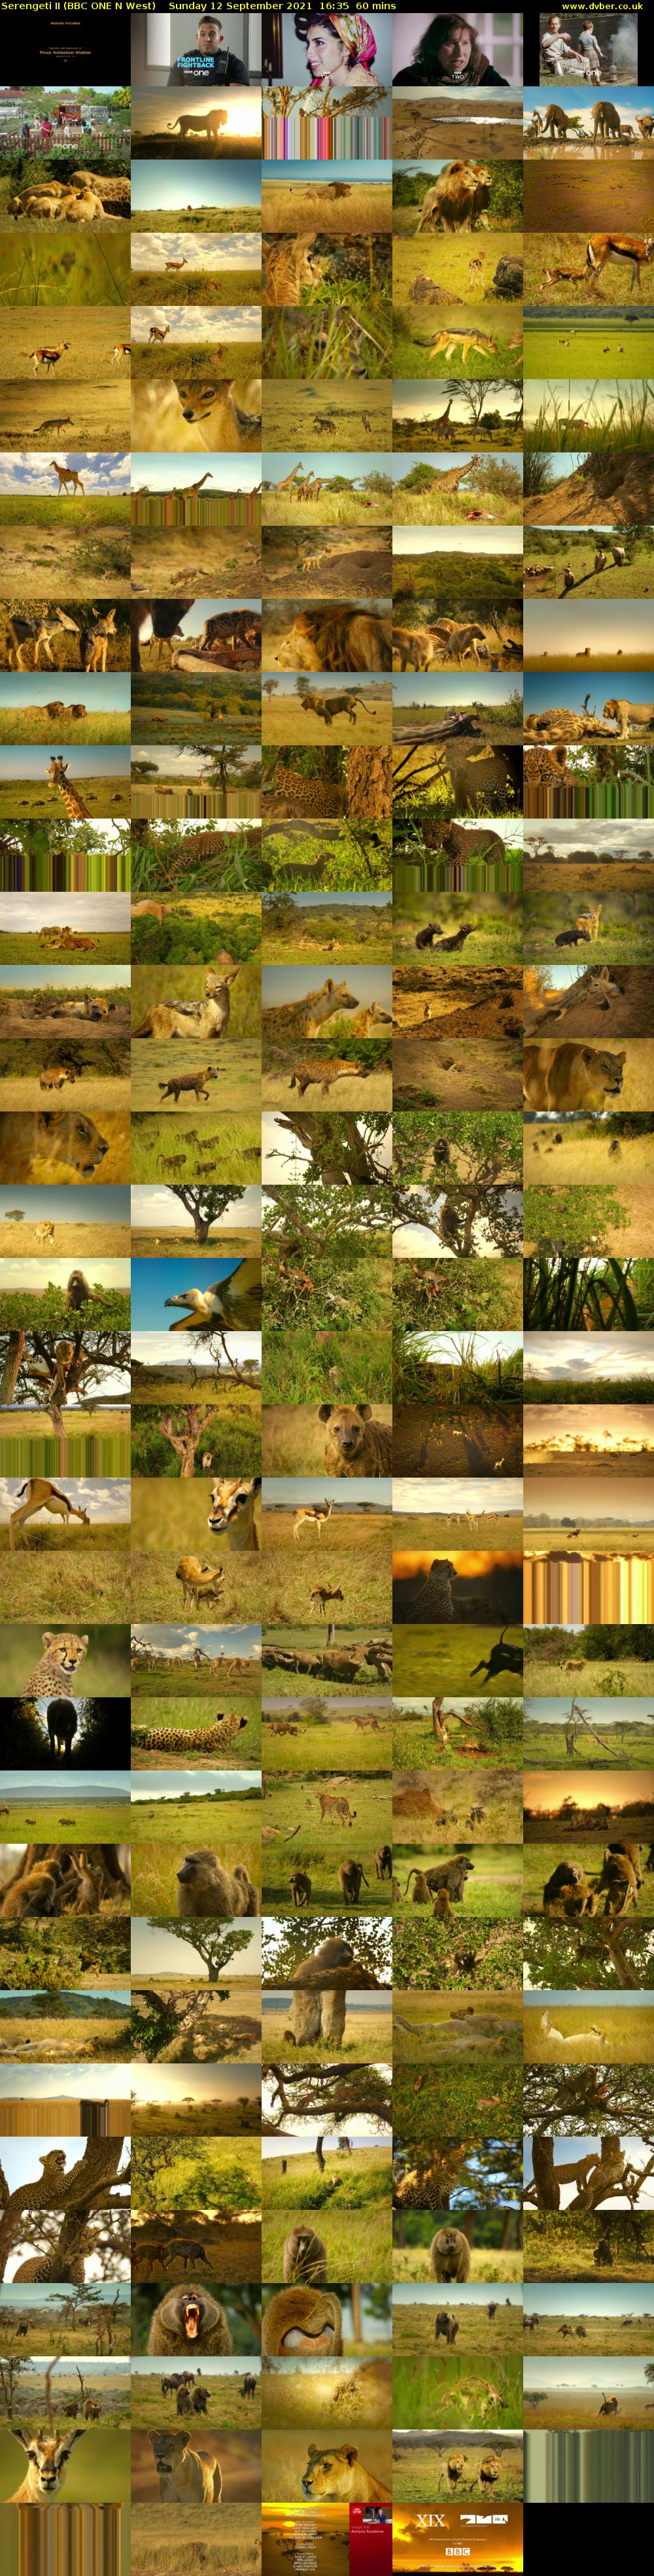 Serengeti II (BBC ONE N West) Sunday 12 September 2021 16:35 - 17:35